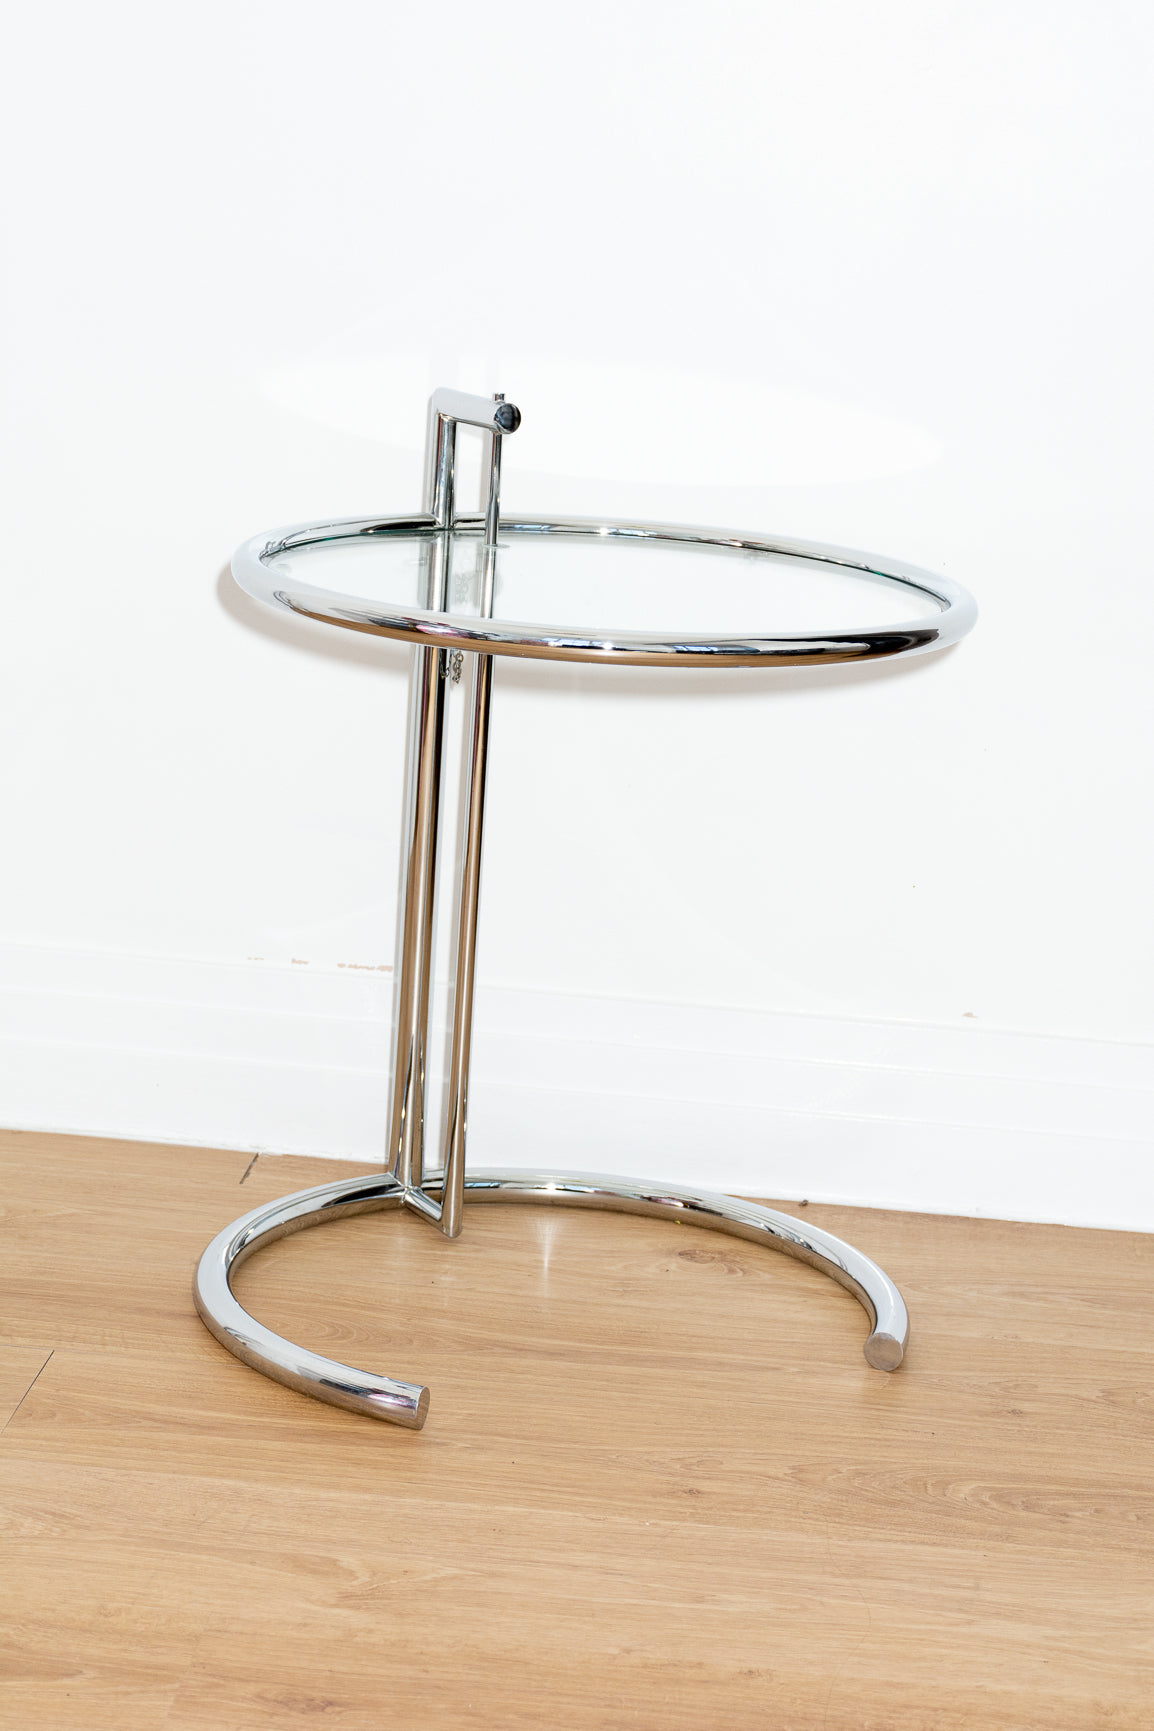 Eileen Grey style side table